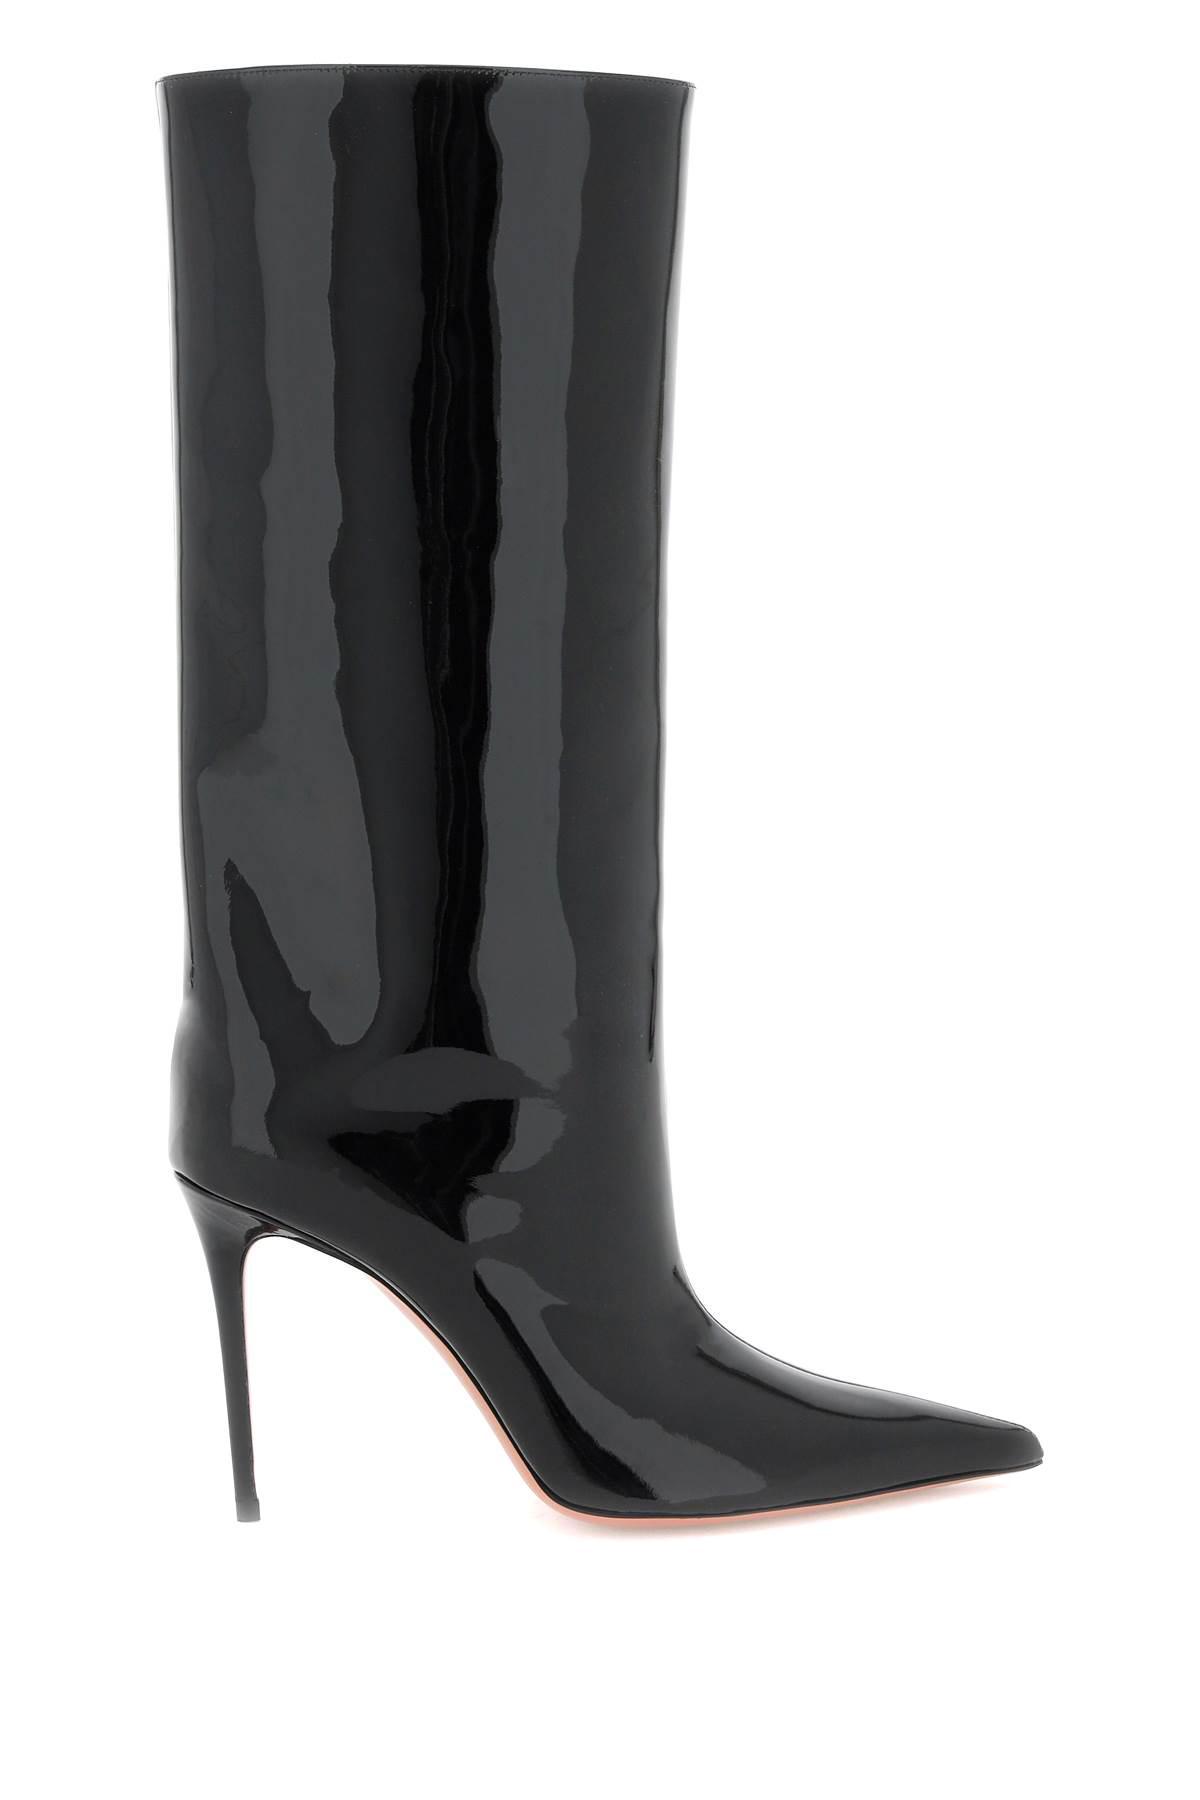 AMINA MUADDI 'fiona' Patent Leather Boots in Black | Lyst